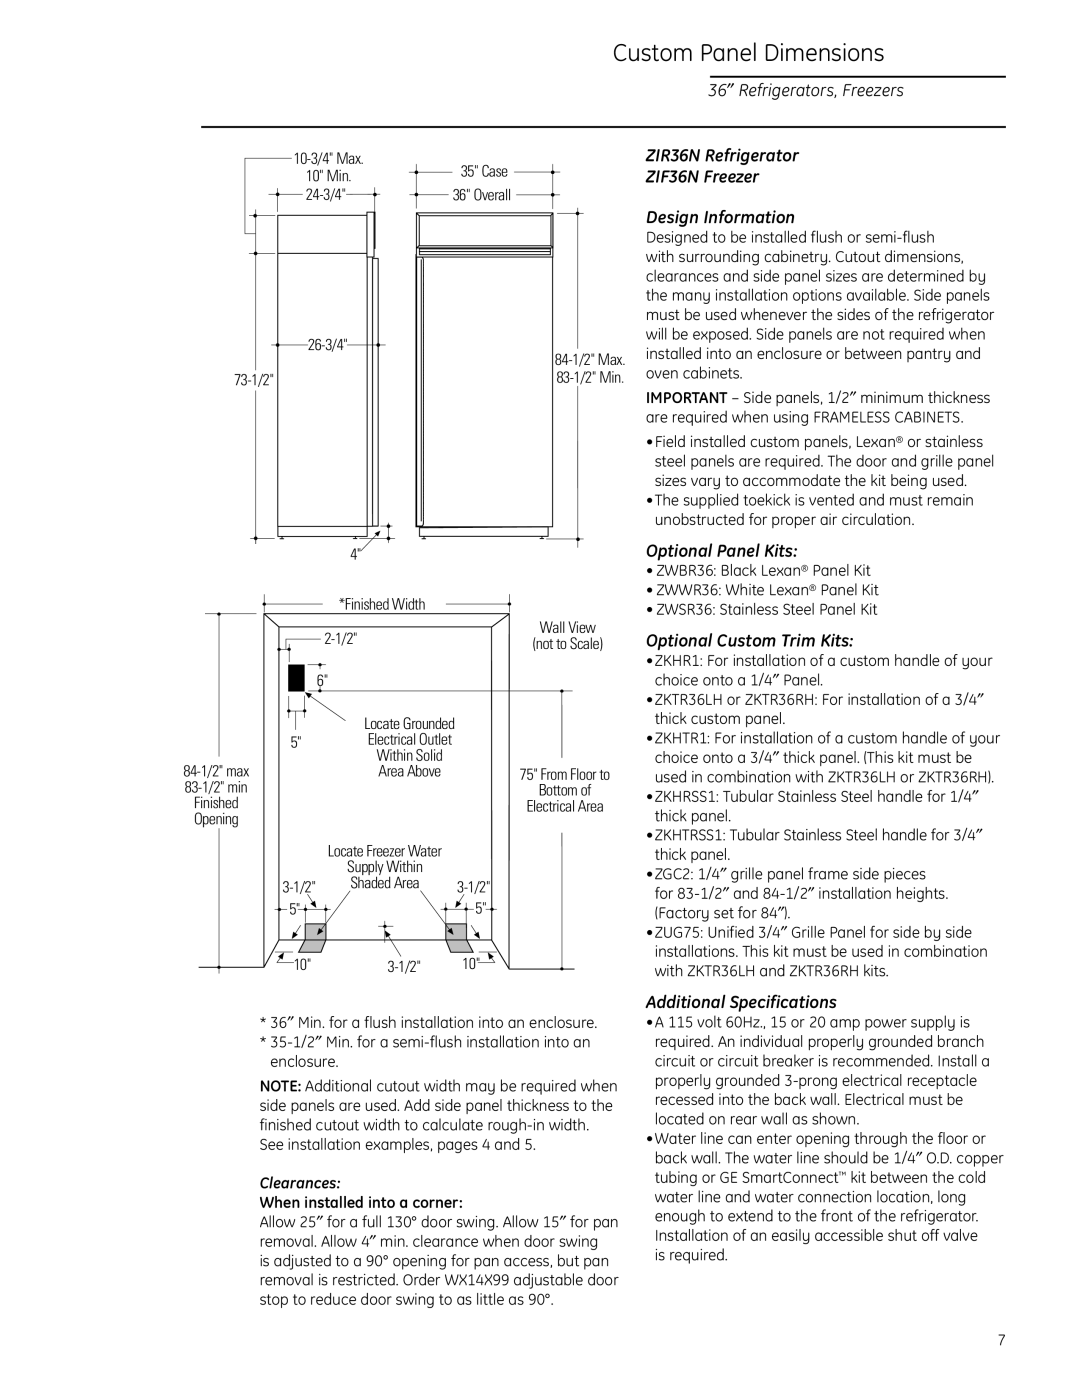 GE ZIF36N LH Custom Panel Dimensions, 36″ Refrigerators, Freezers, ZIR36N Refrigerator ZIF36N Freezer, Design Information 